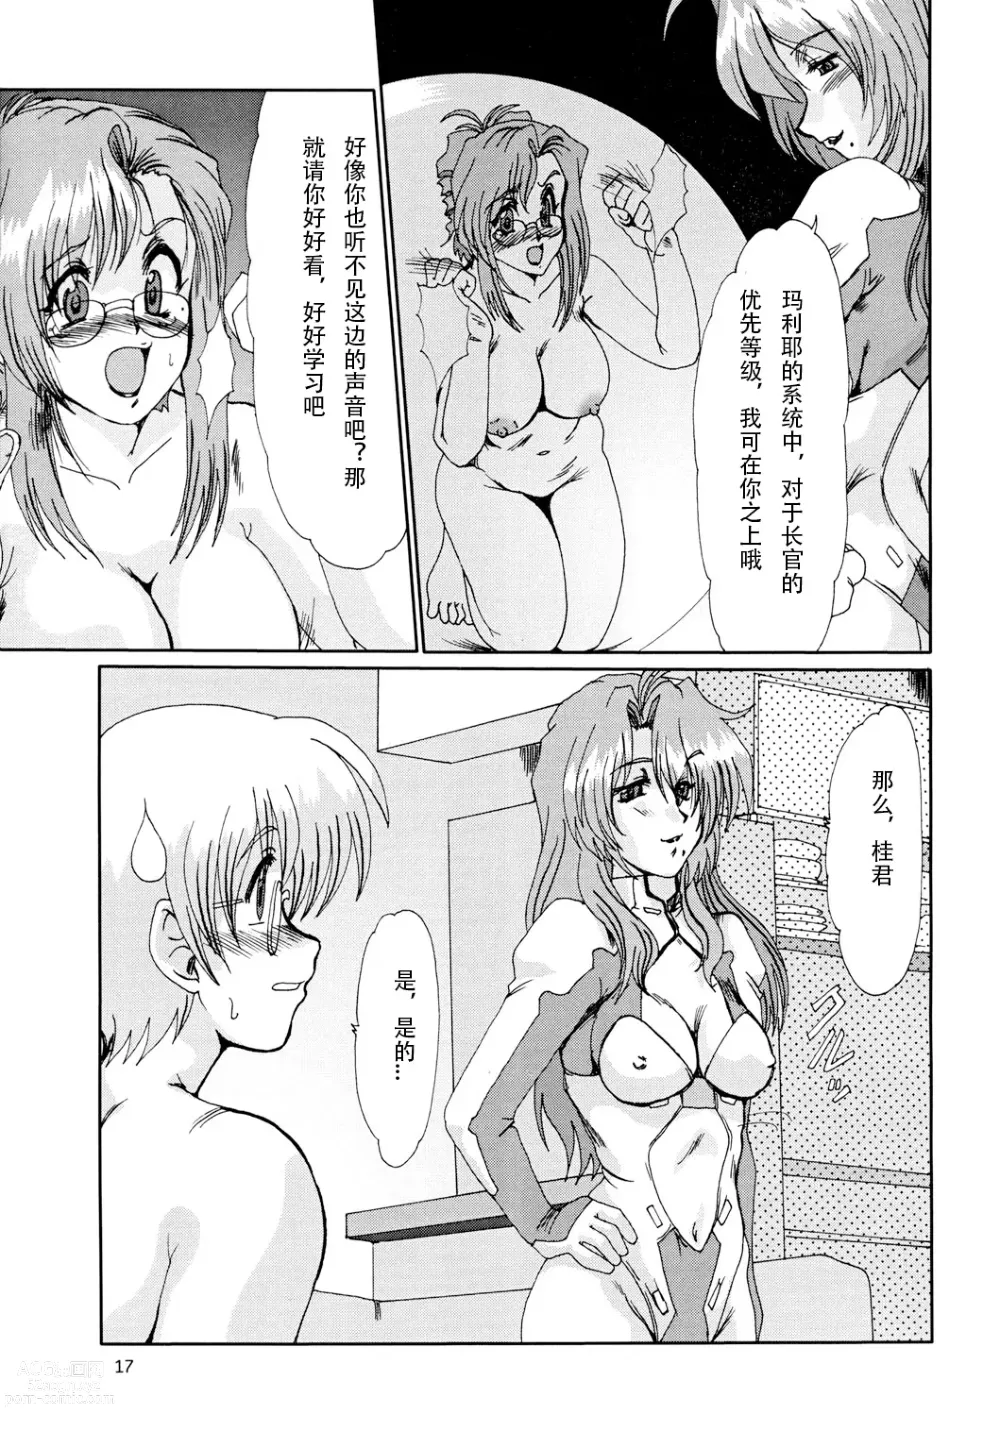 Page 16 of doujinshi F-41